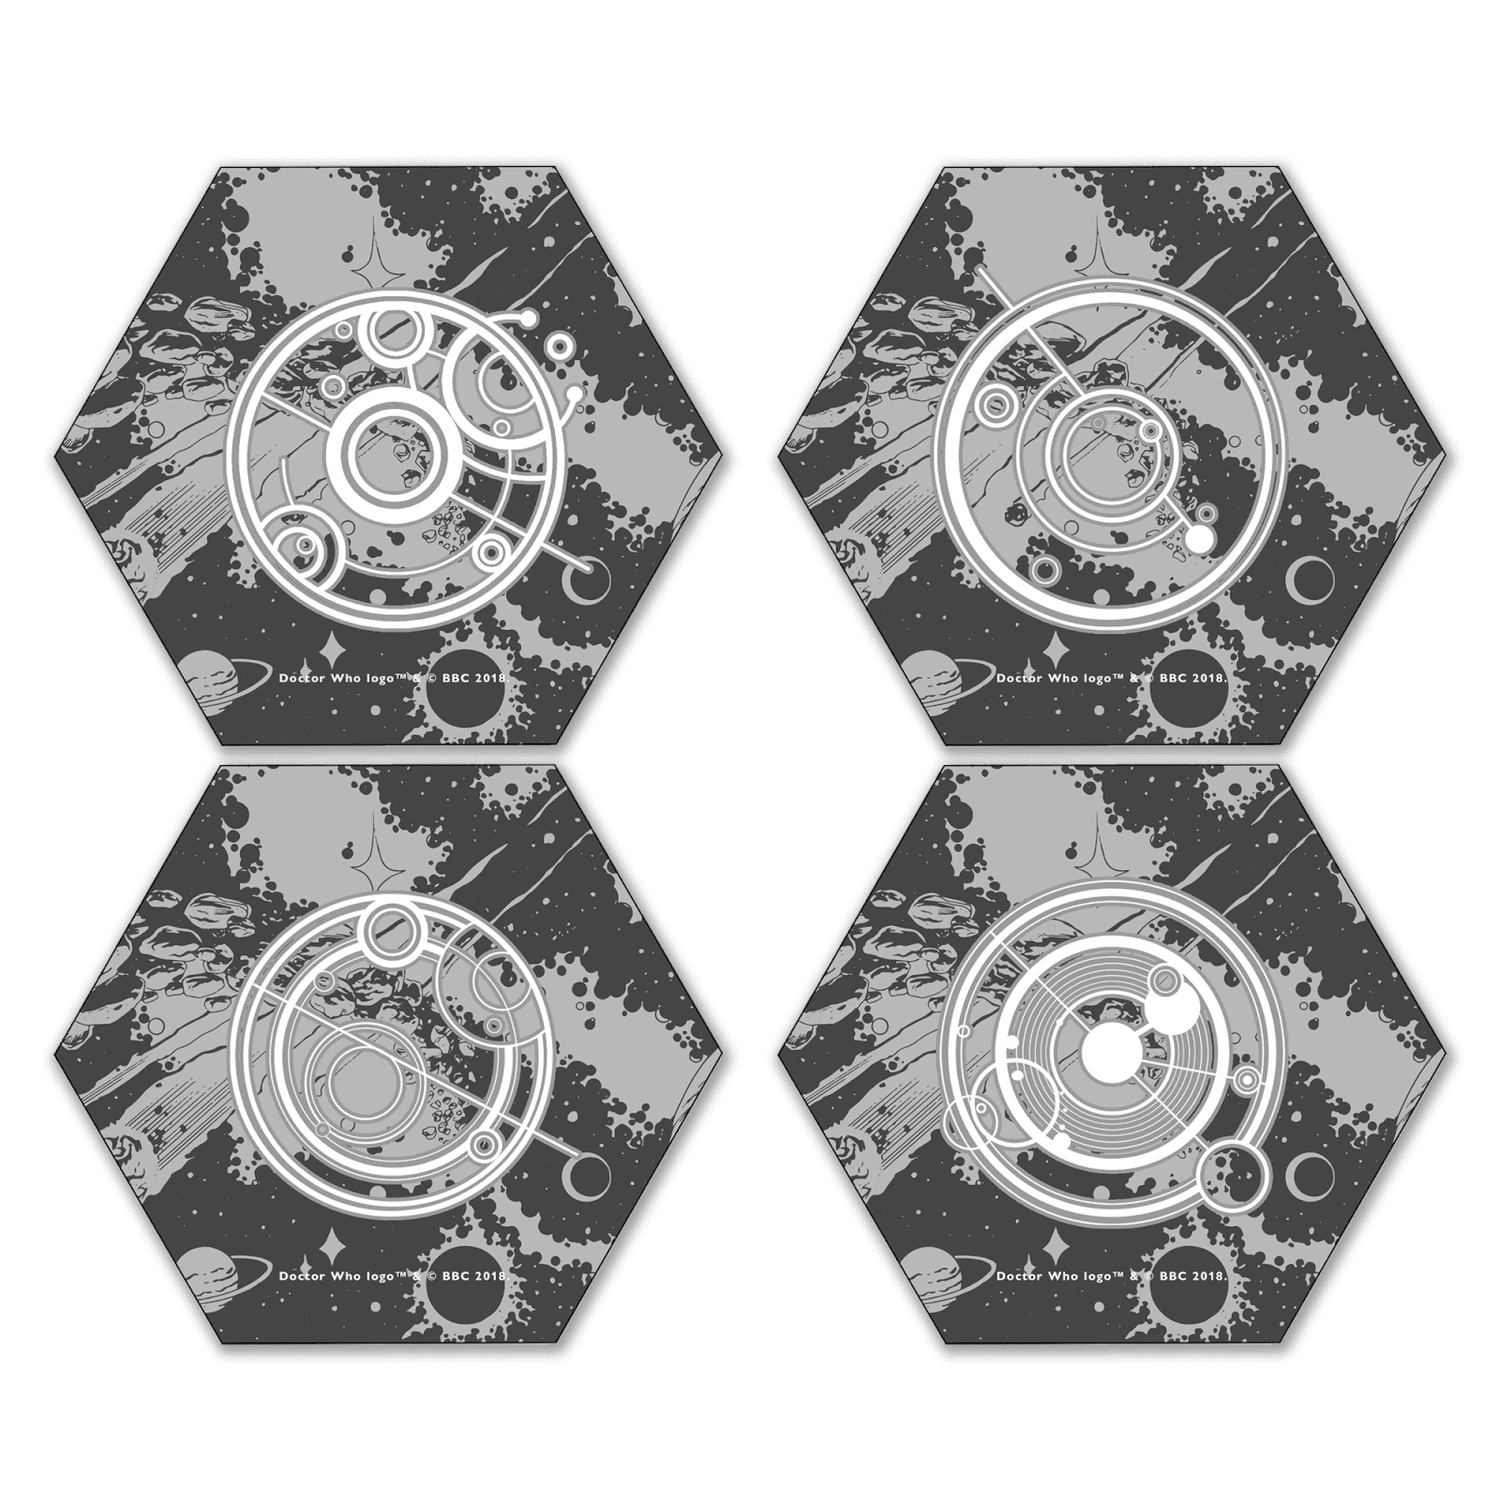 Doctor Who Gallifrey Icons Hexagonal Coaster Set